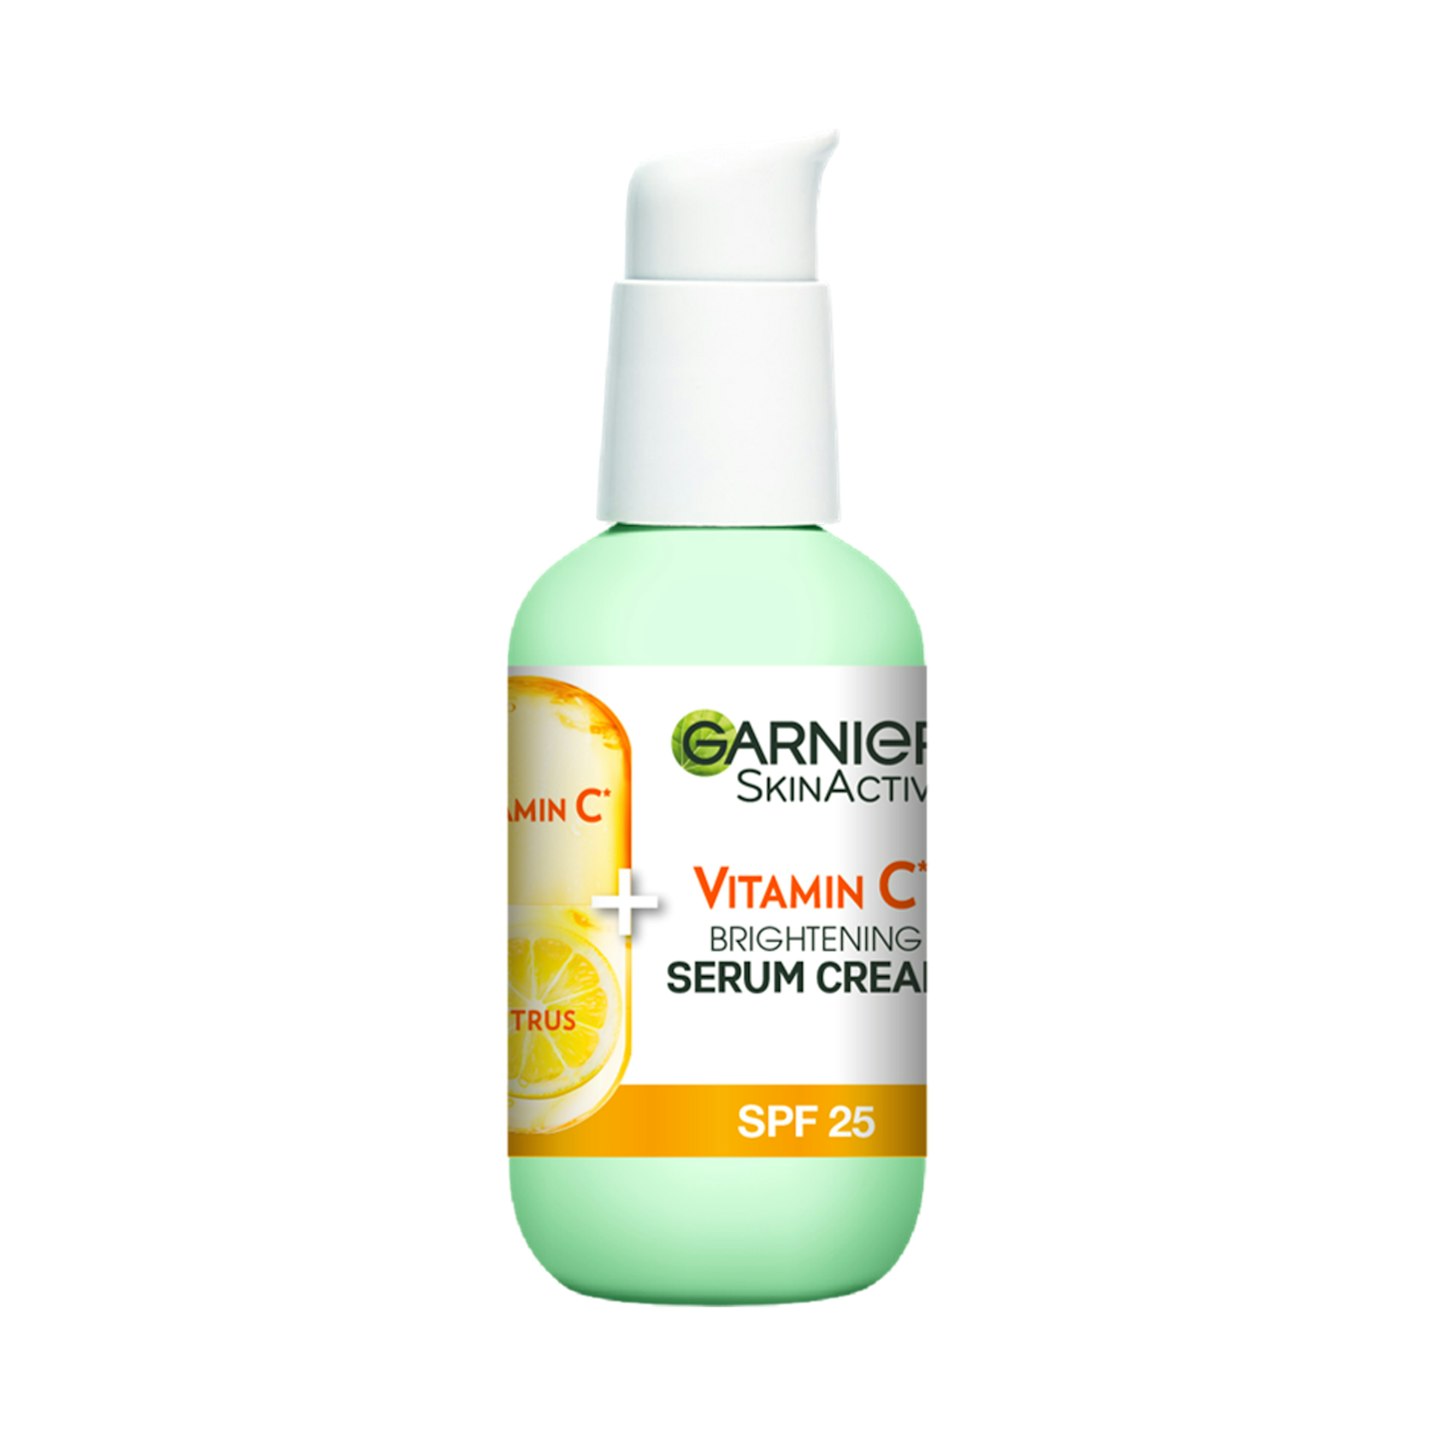 Garnier-Vitamin-C-Serum-Cream-9.95